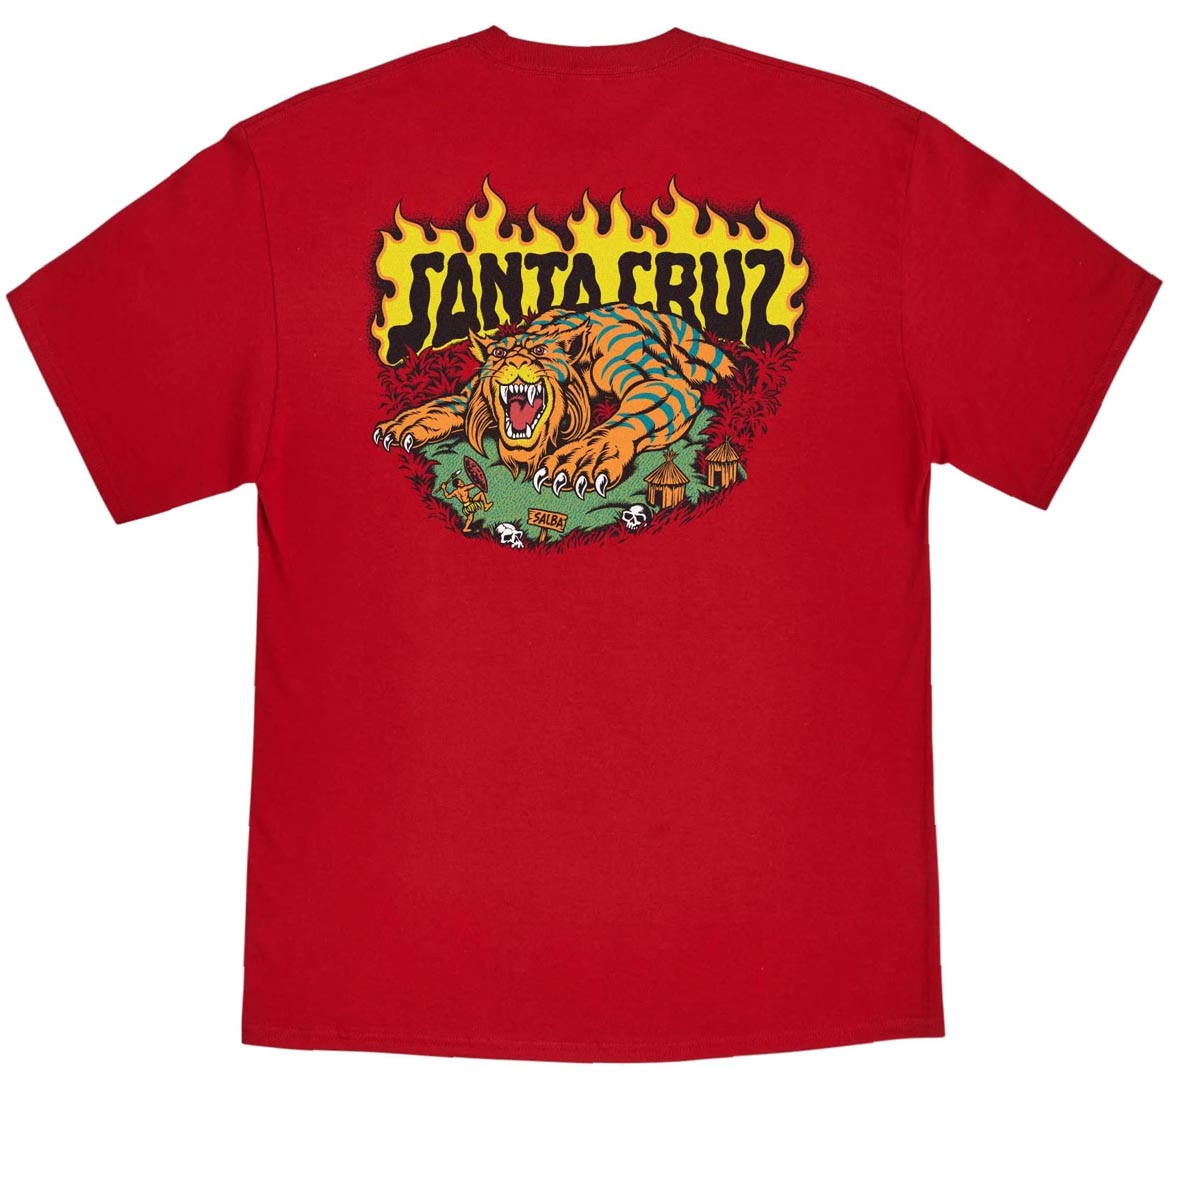 Santa Cruz Salba Tiger Redux T-Shirt - Rich Red image 1